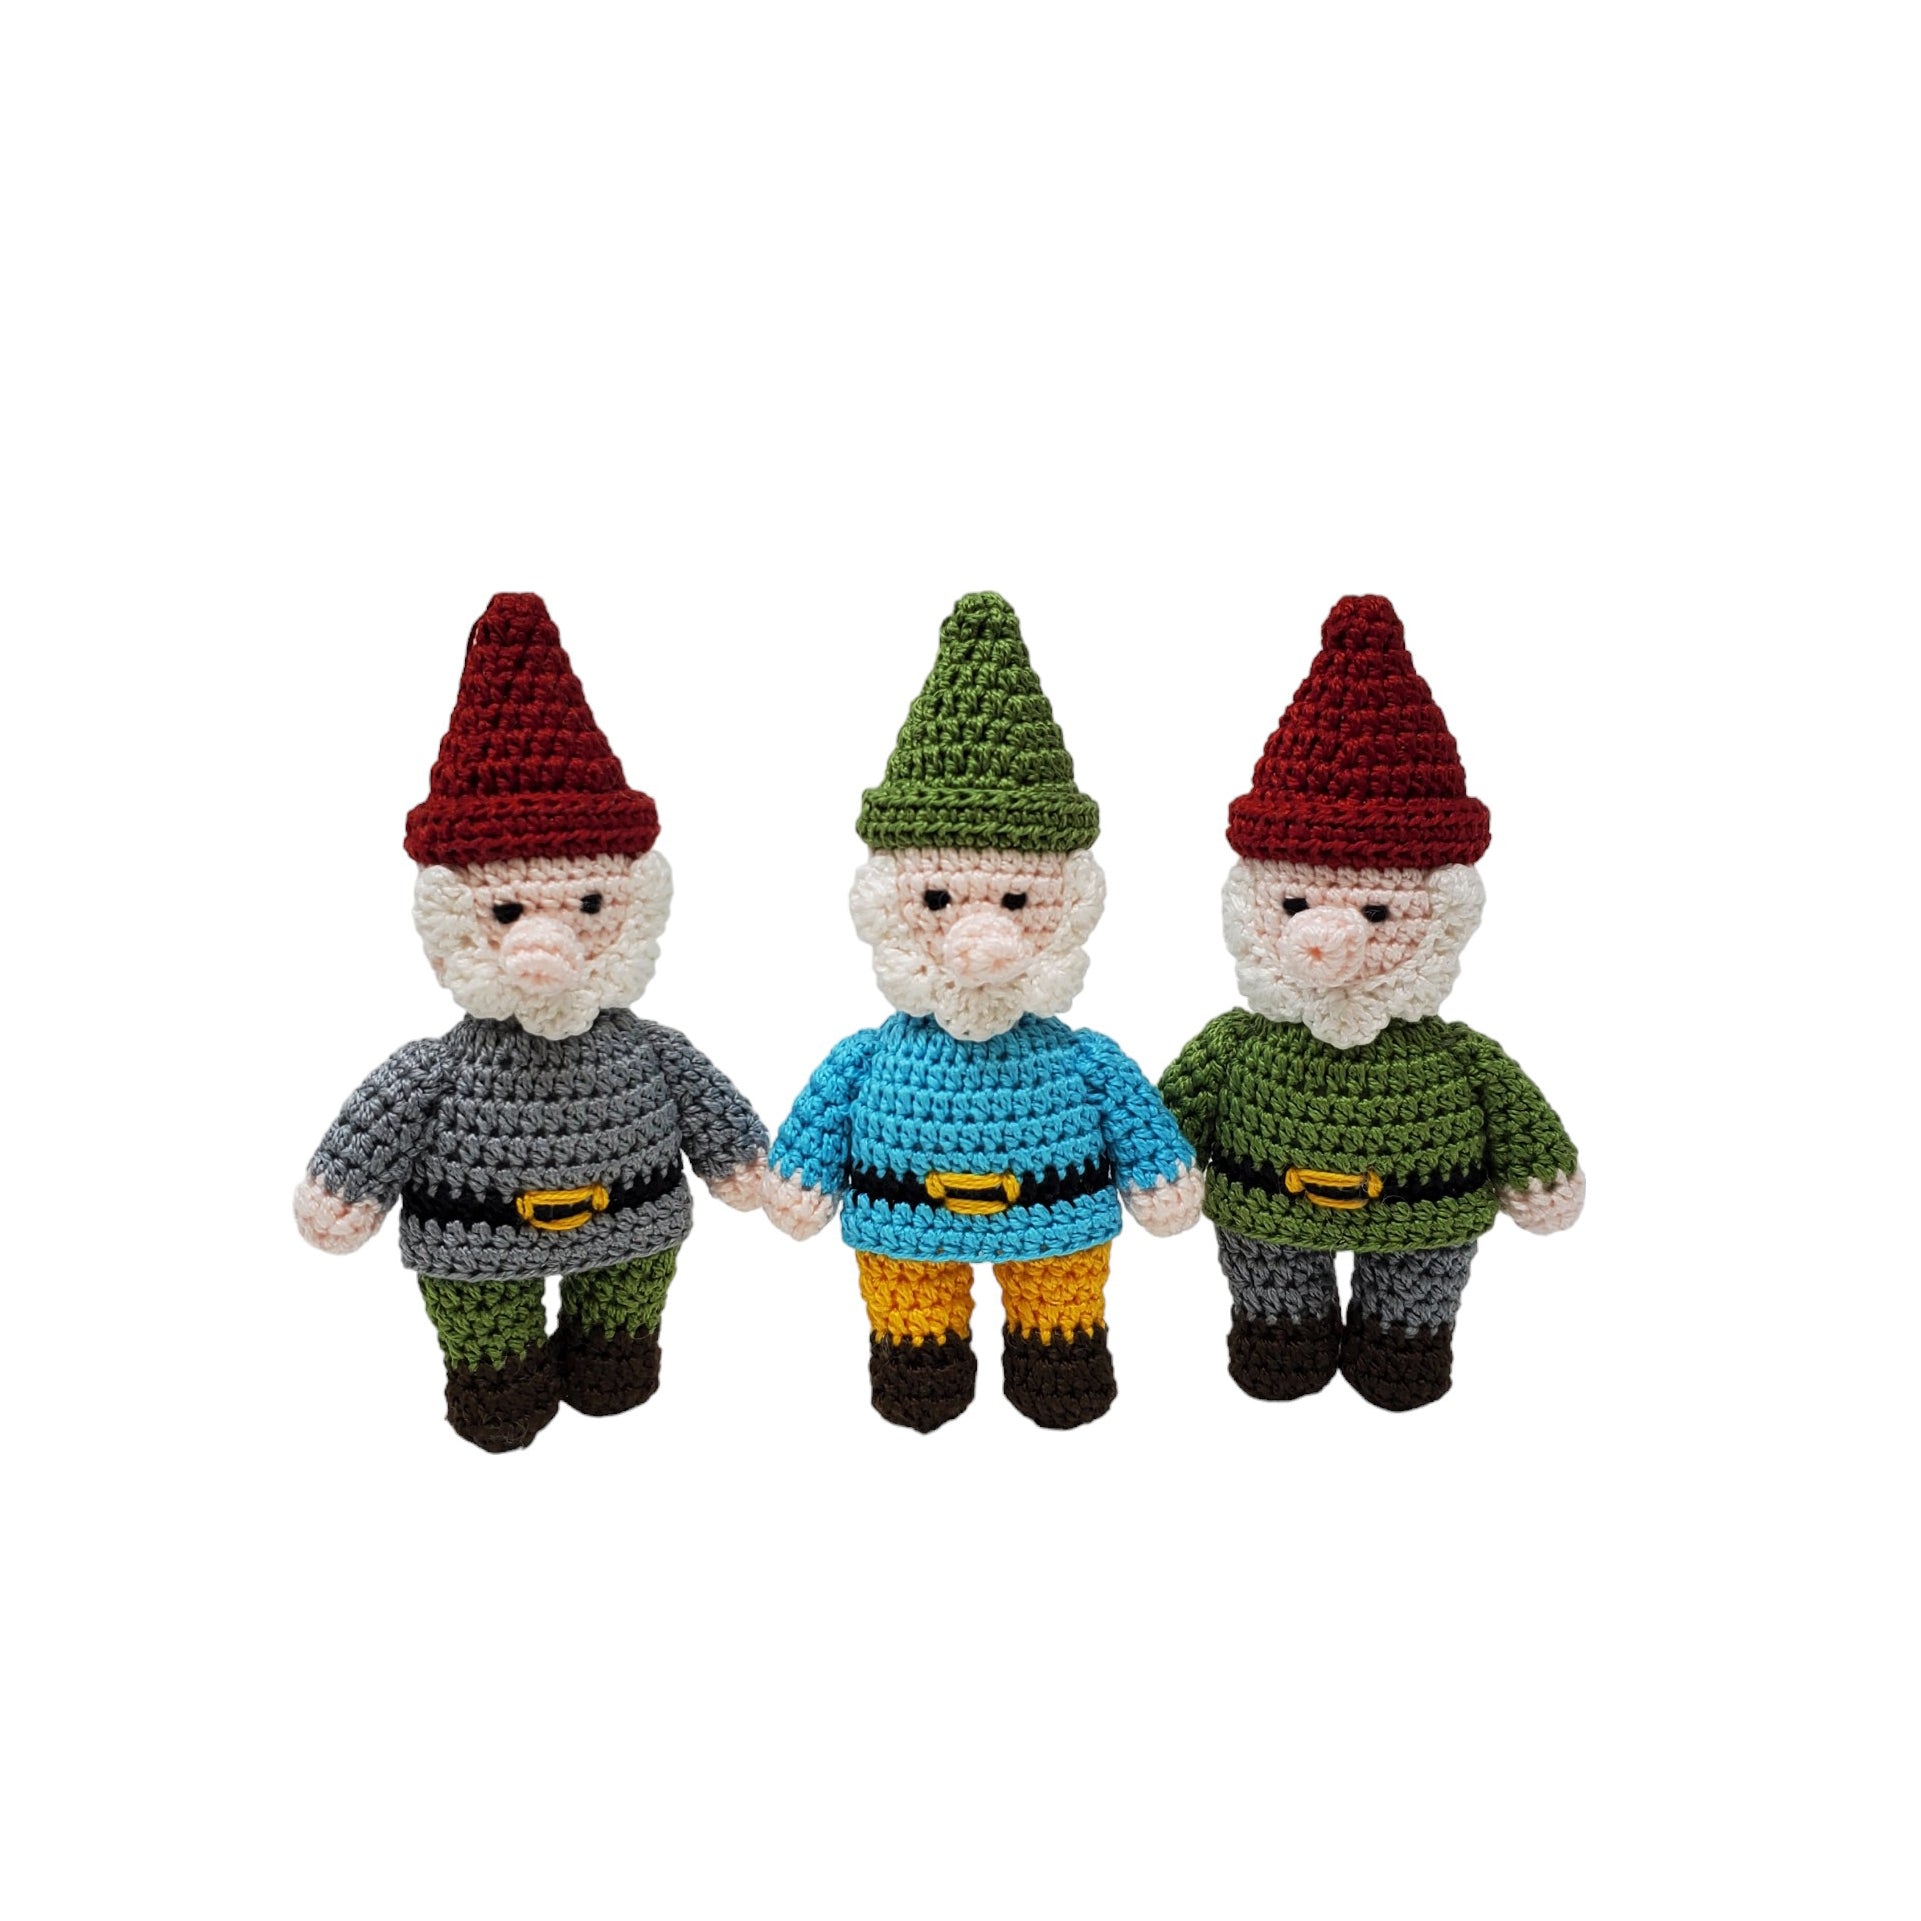 Crochet Gnome Ornaments, set of 3